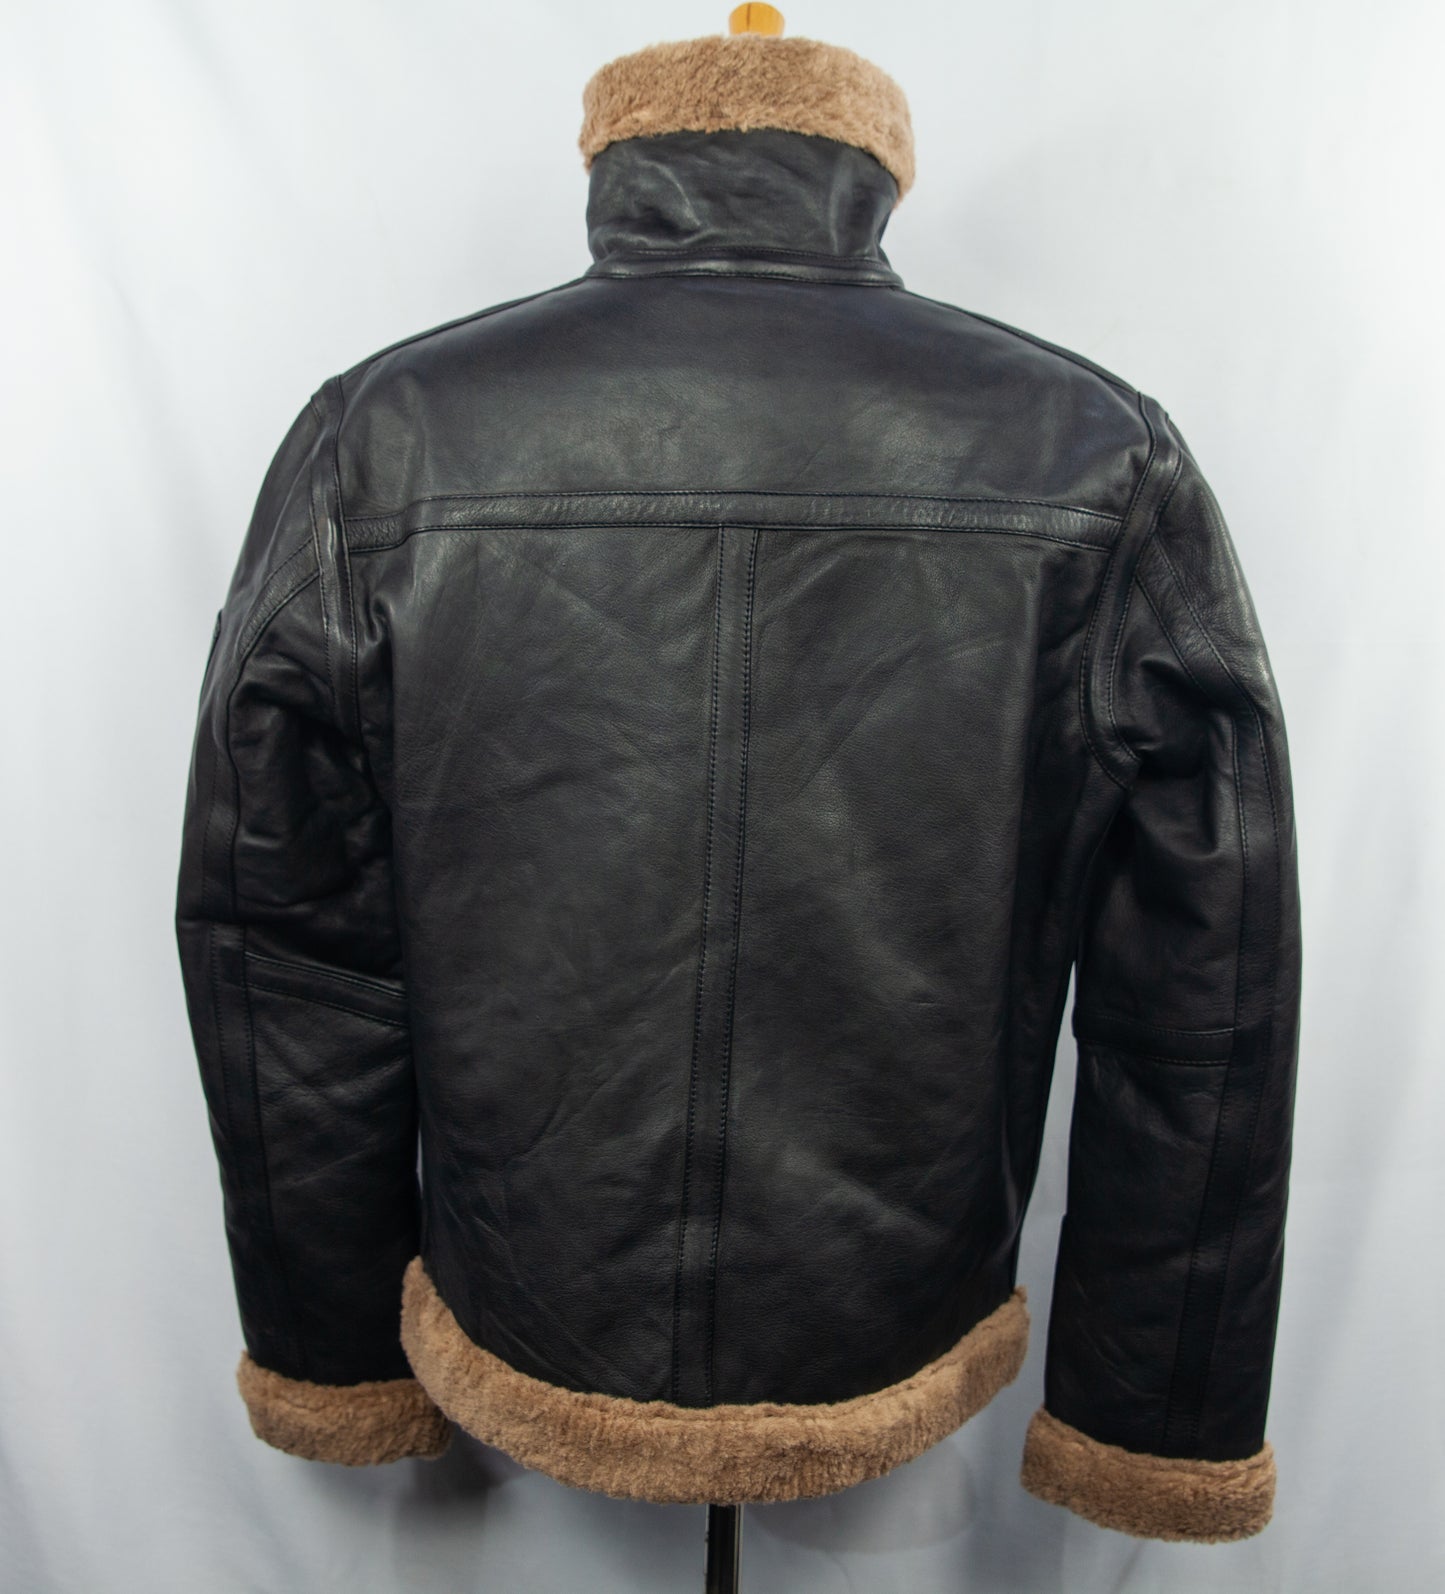 Aviator Black Leather Jacket with Fur Collar